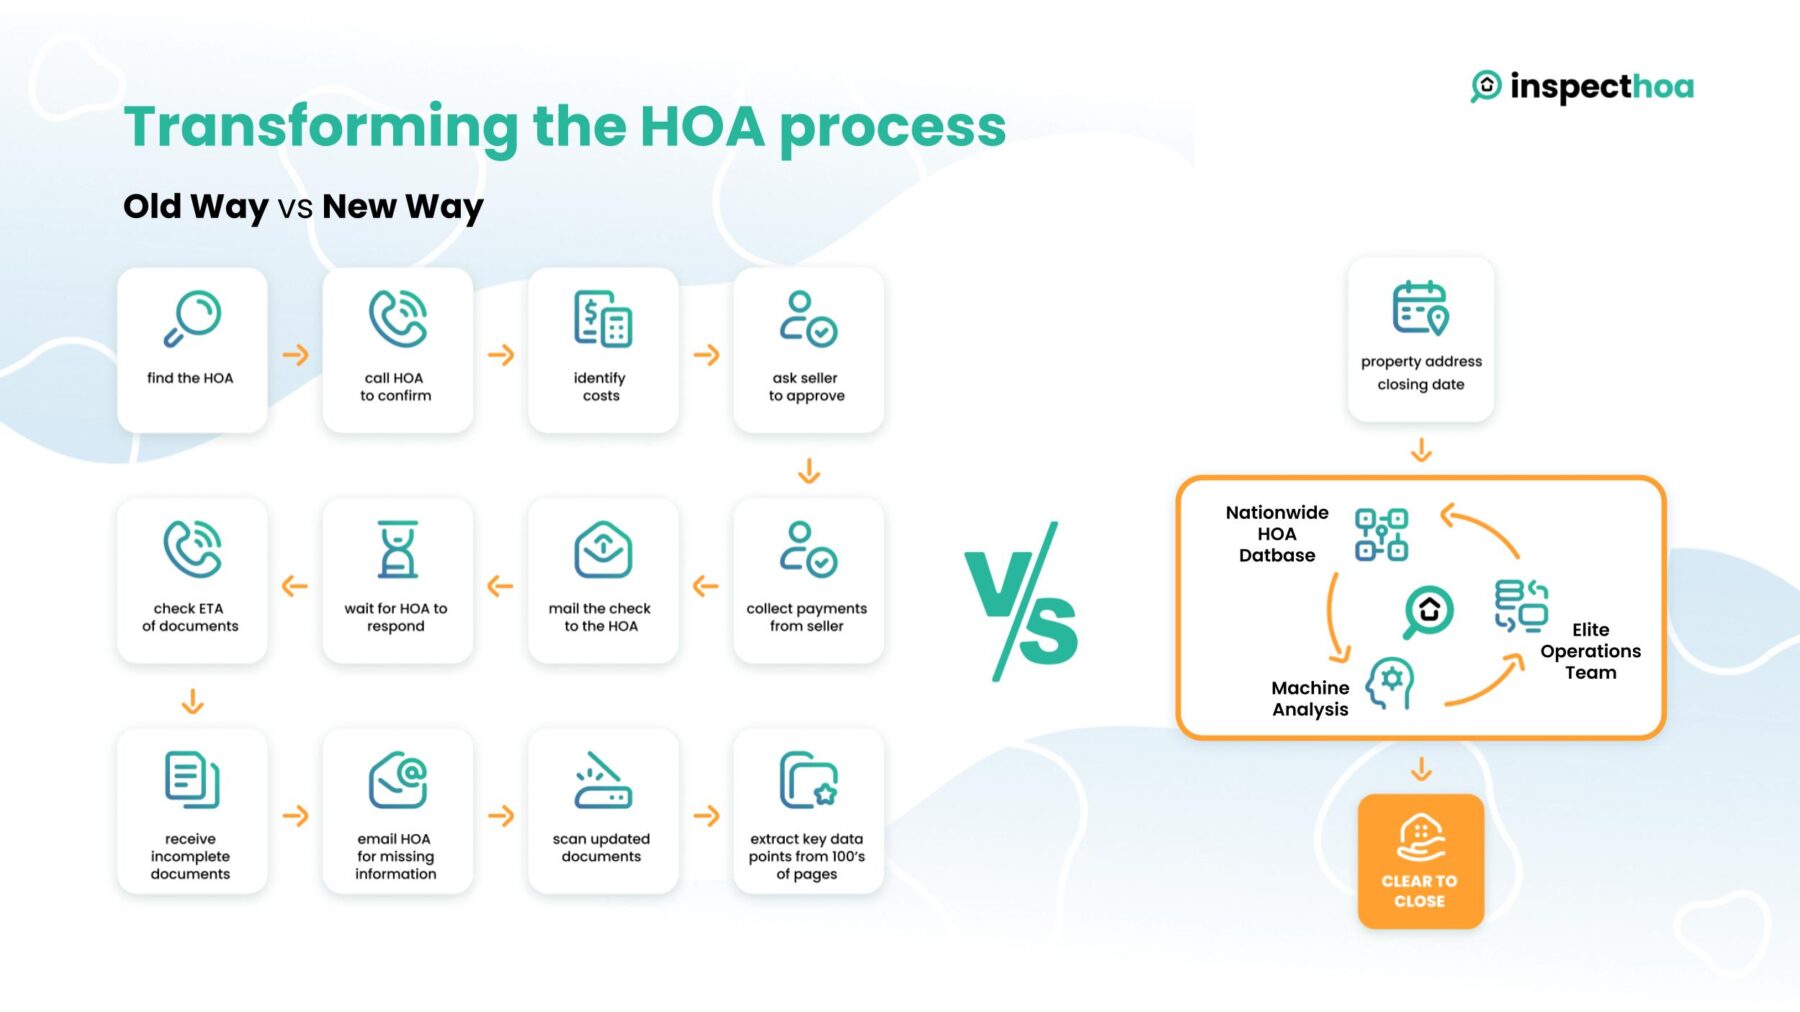 how to request hoa documents, process comparison inspecthoa vs manual/internally